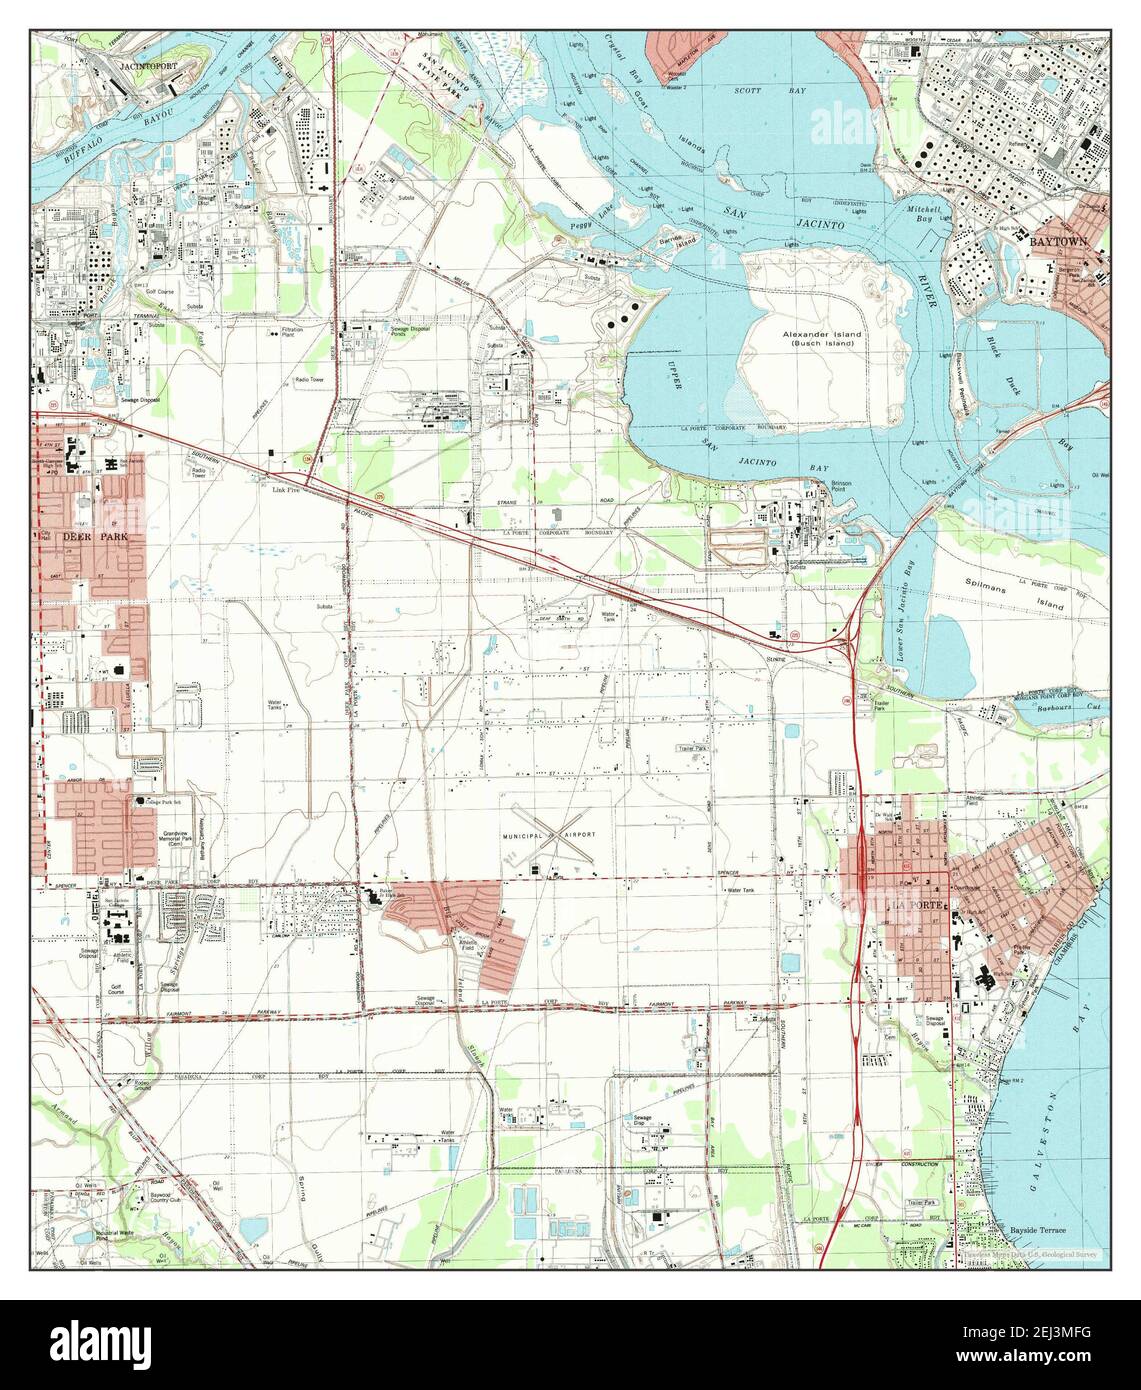 La Porte Texas Map 1982 124000 United States Of America By Timeless Maps Data Us Geological Survey 2EJ3MFG 